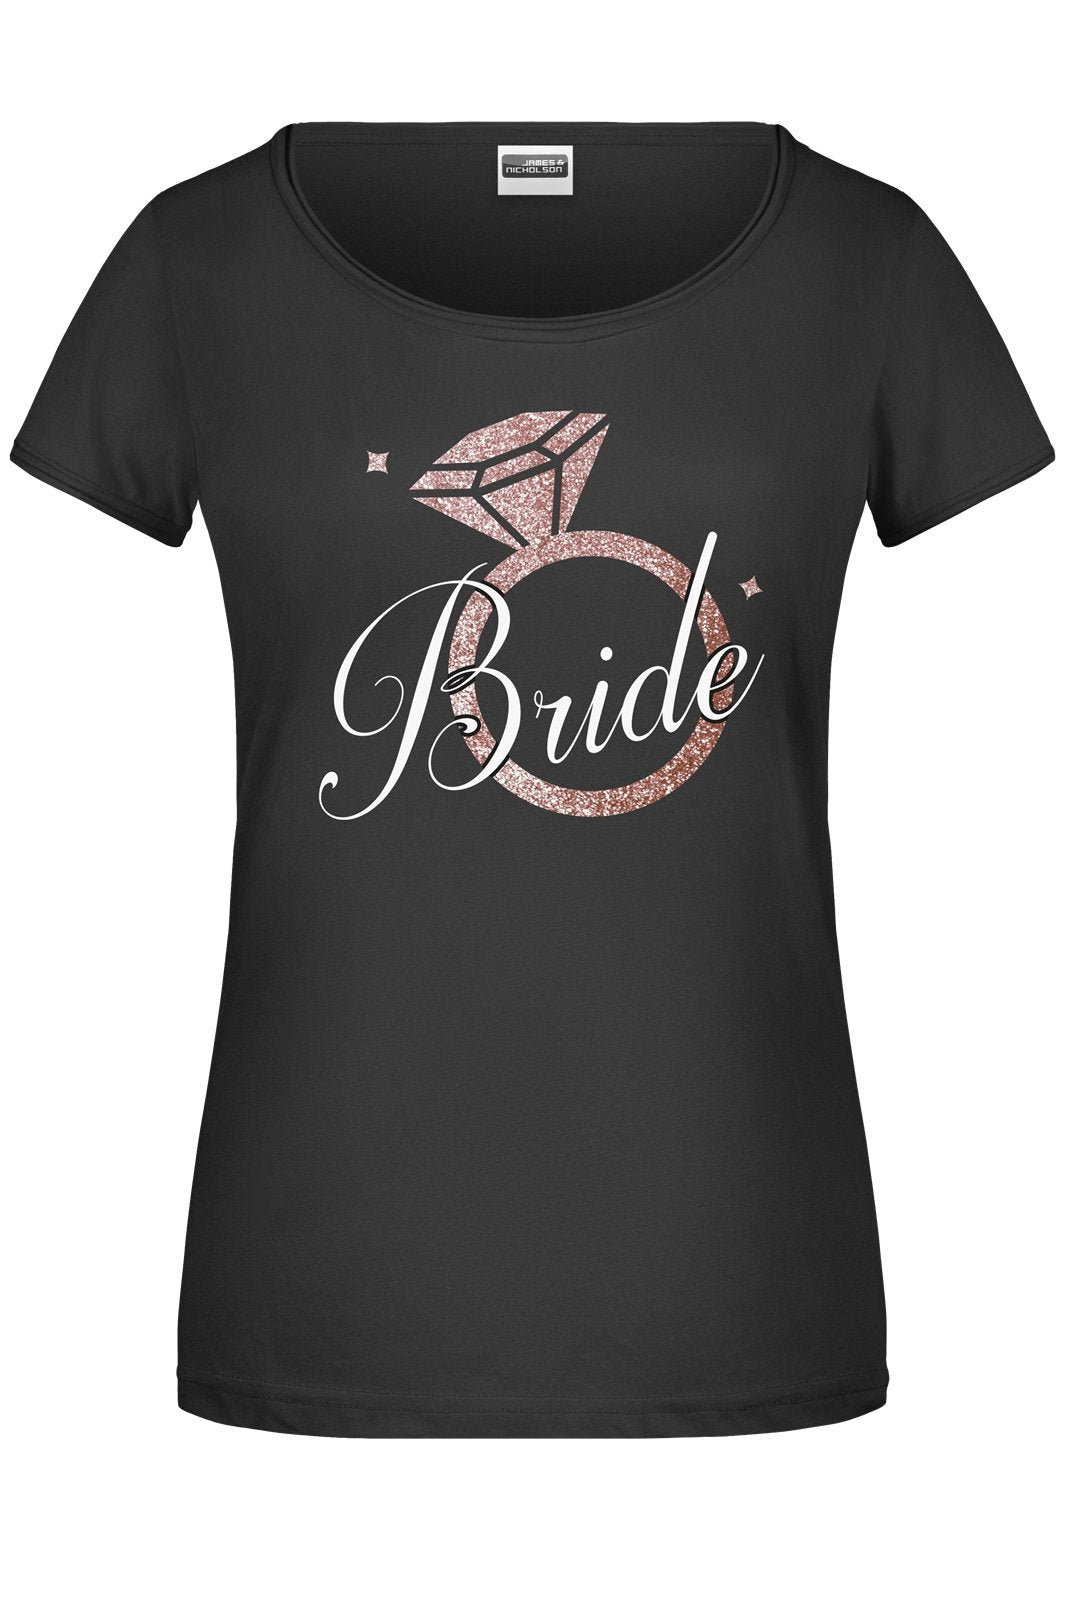 Bild: T-Shirt - Bride Geschenkidee